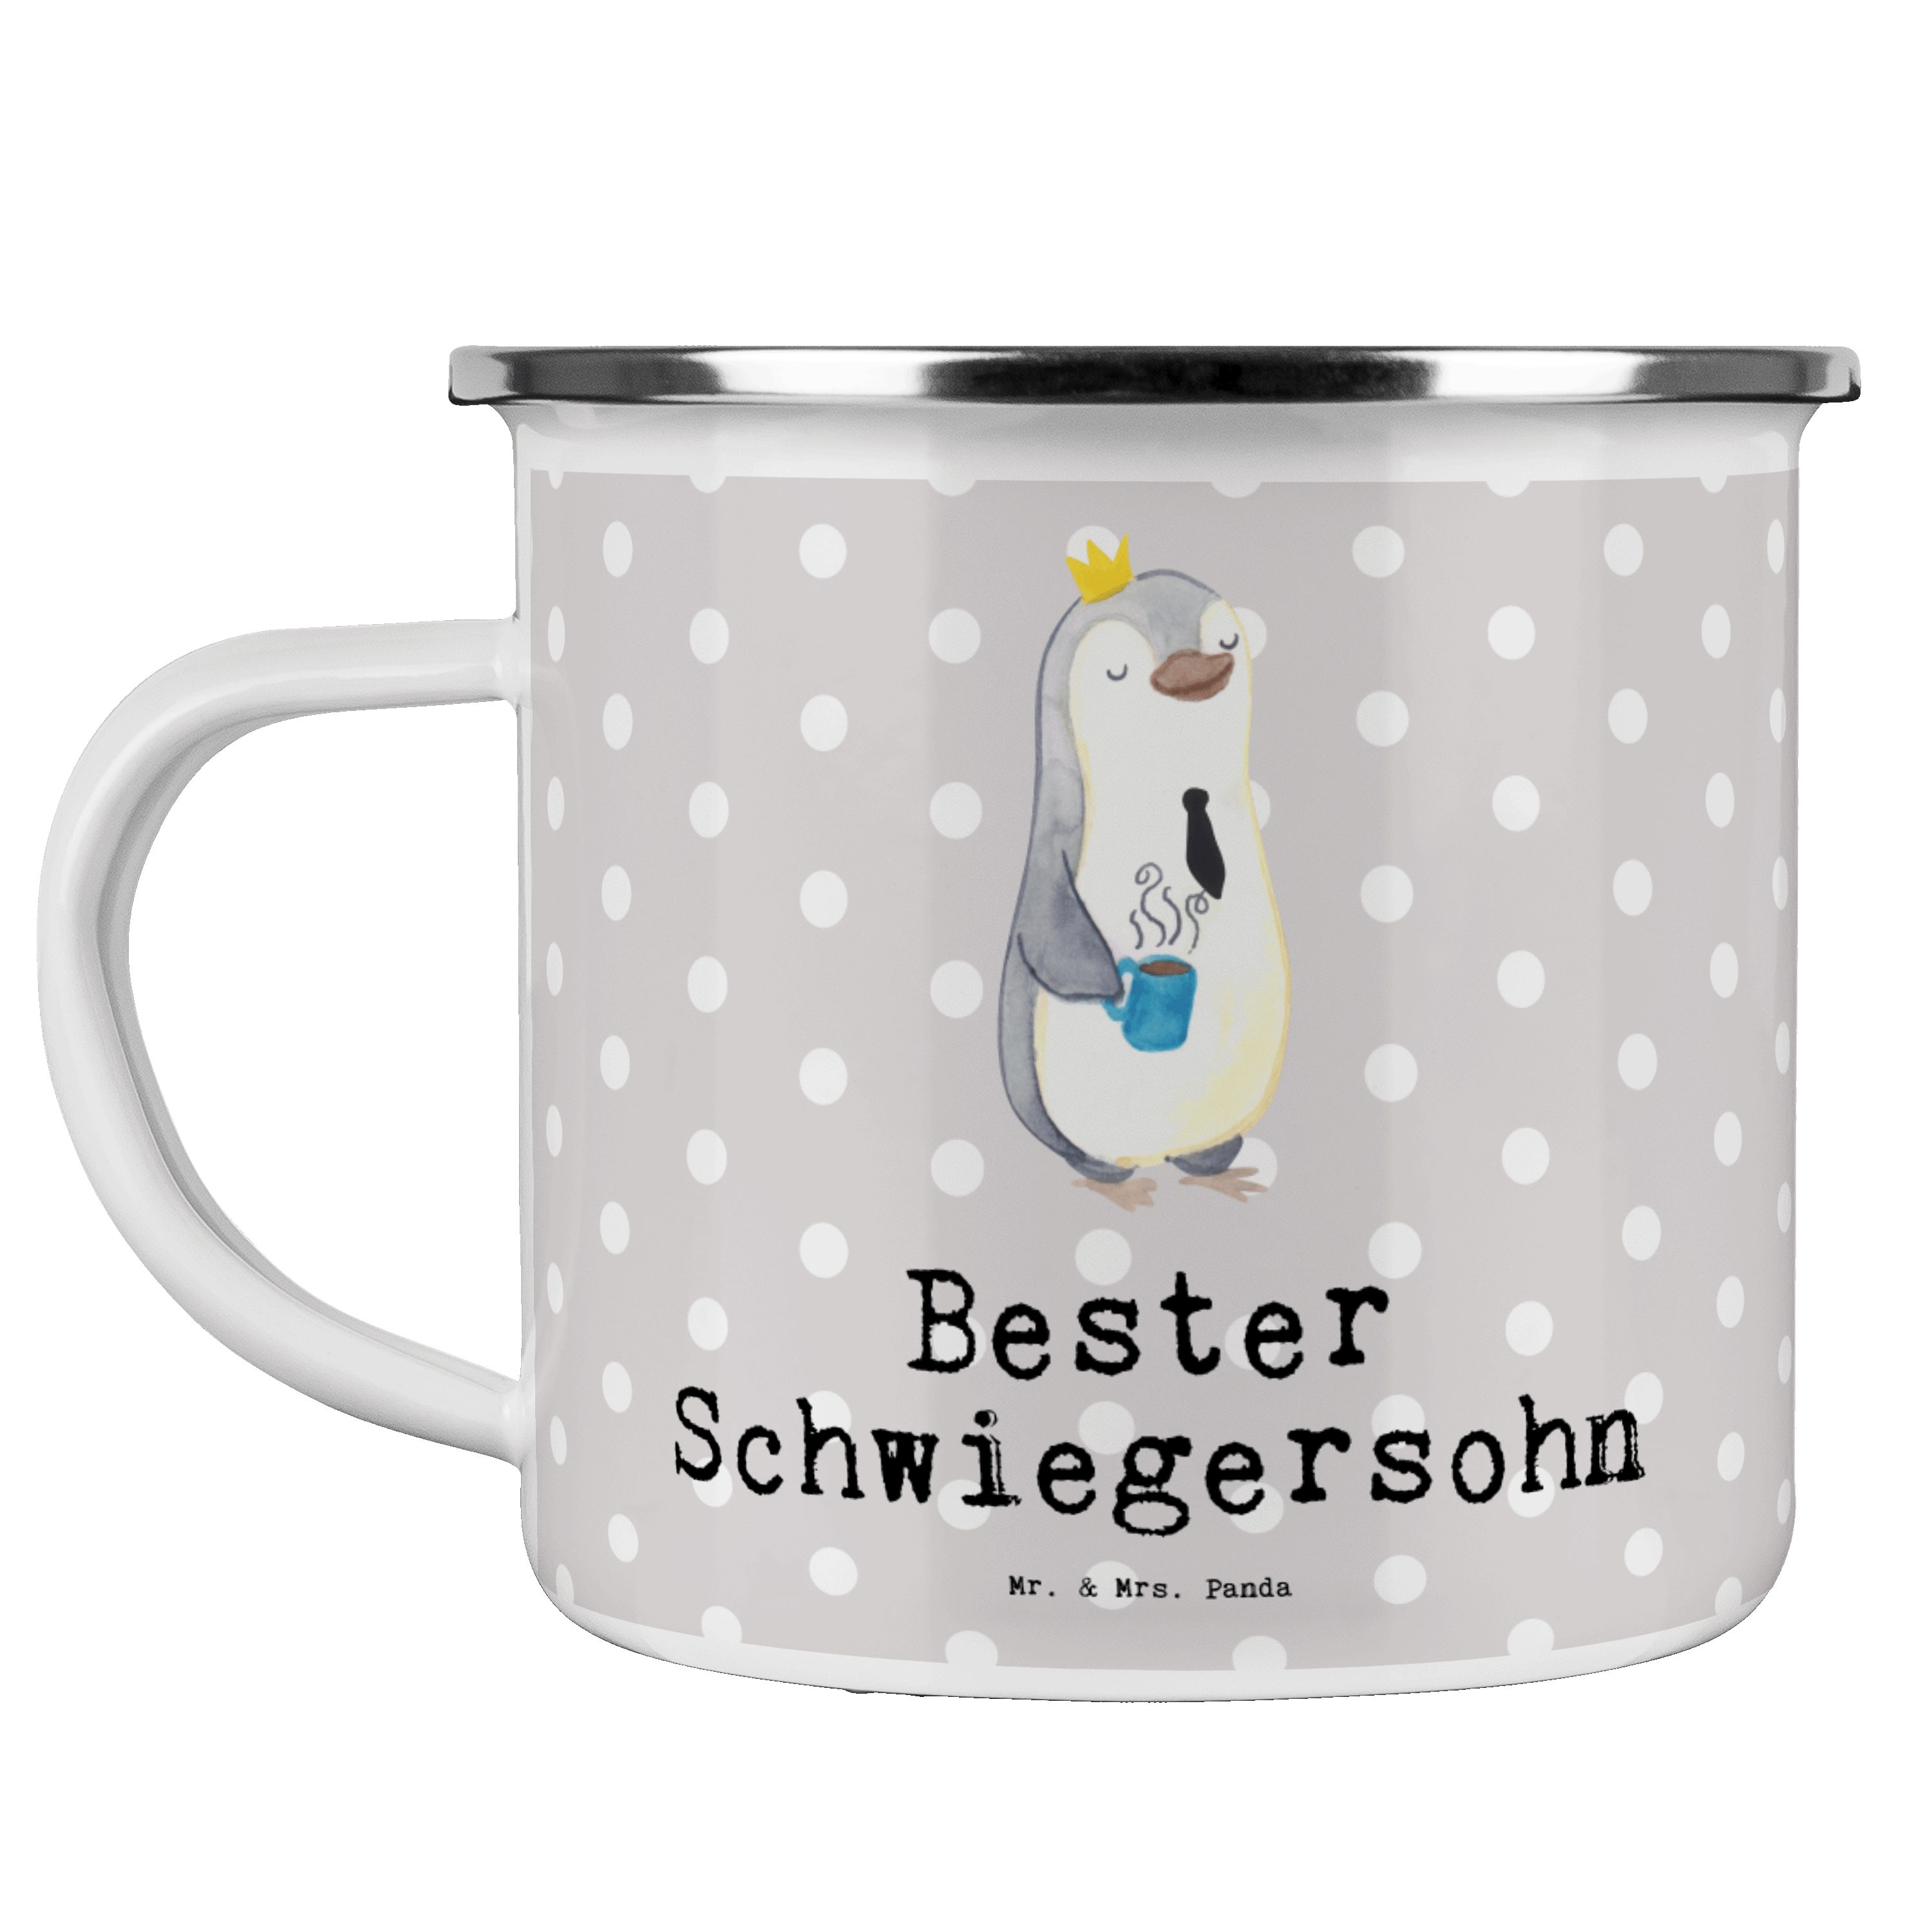 Mr. & Mrs. Panda Becher Pinguin Bester Schwiegersohn - Grau Pastell - Geschenk, Emaille Campi, Emaille